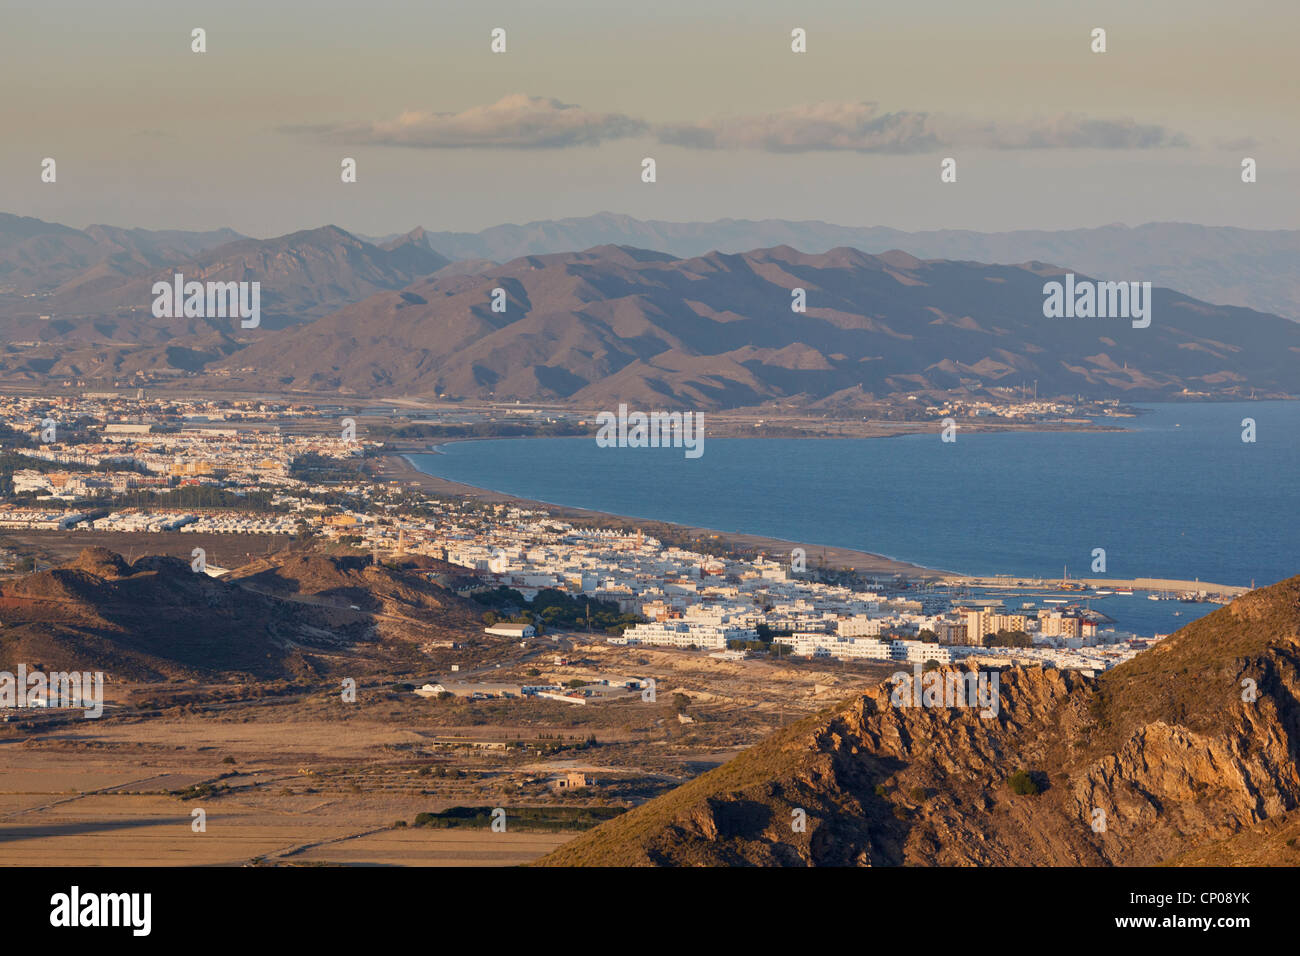 High view looking towards Garrucha, Almeria Province, Spain. Stock Photo